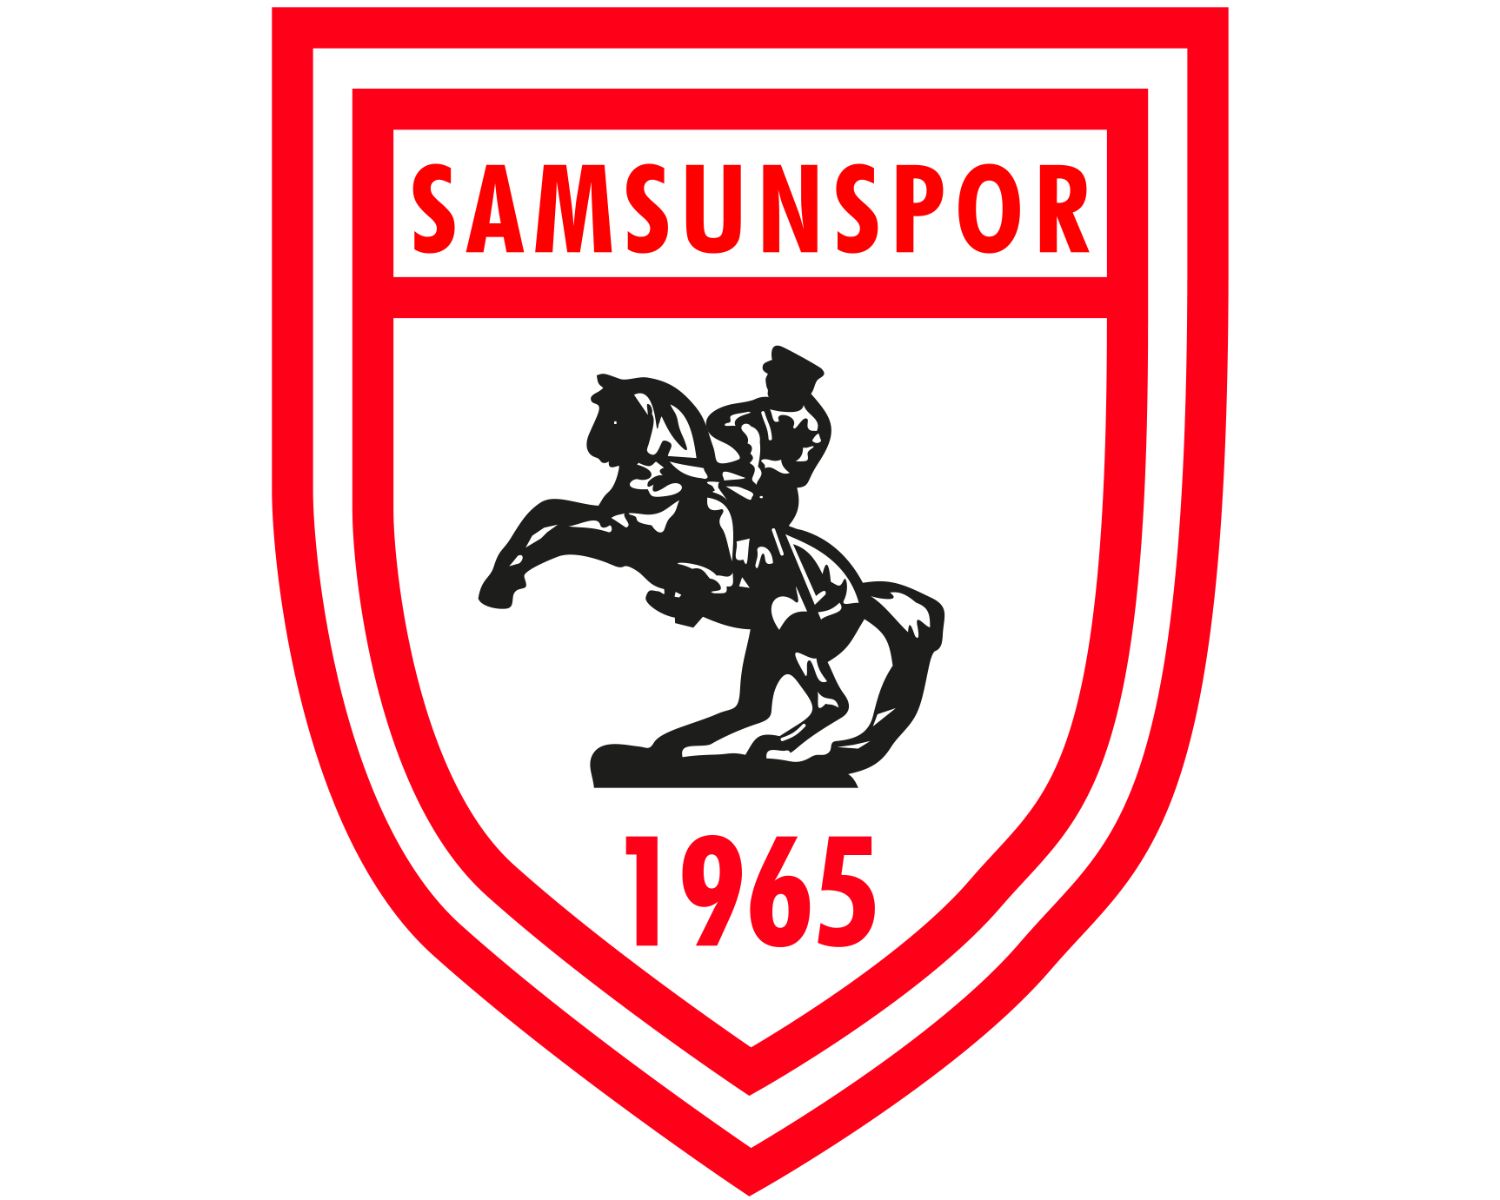 samsunspor-19-football-club-facts